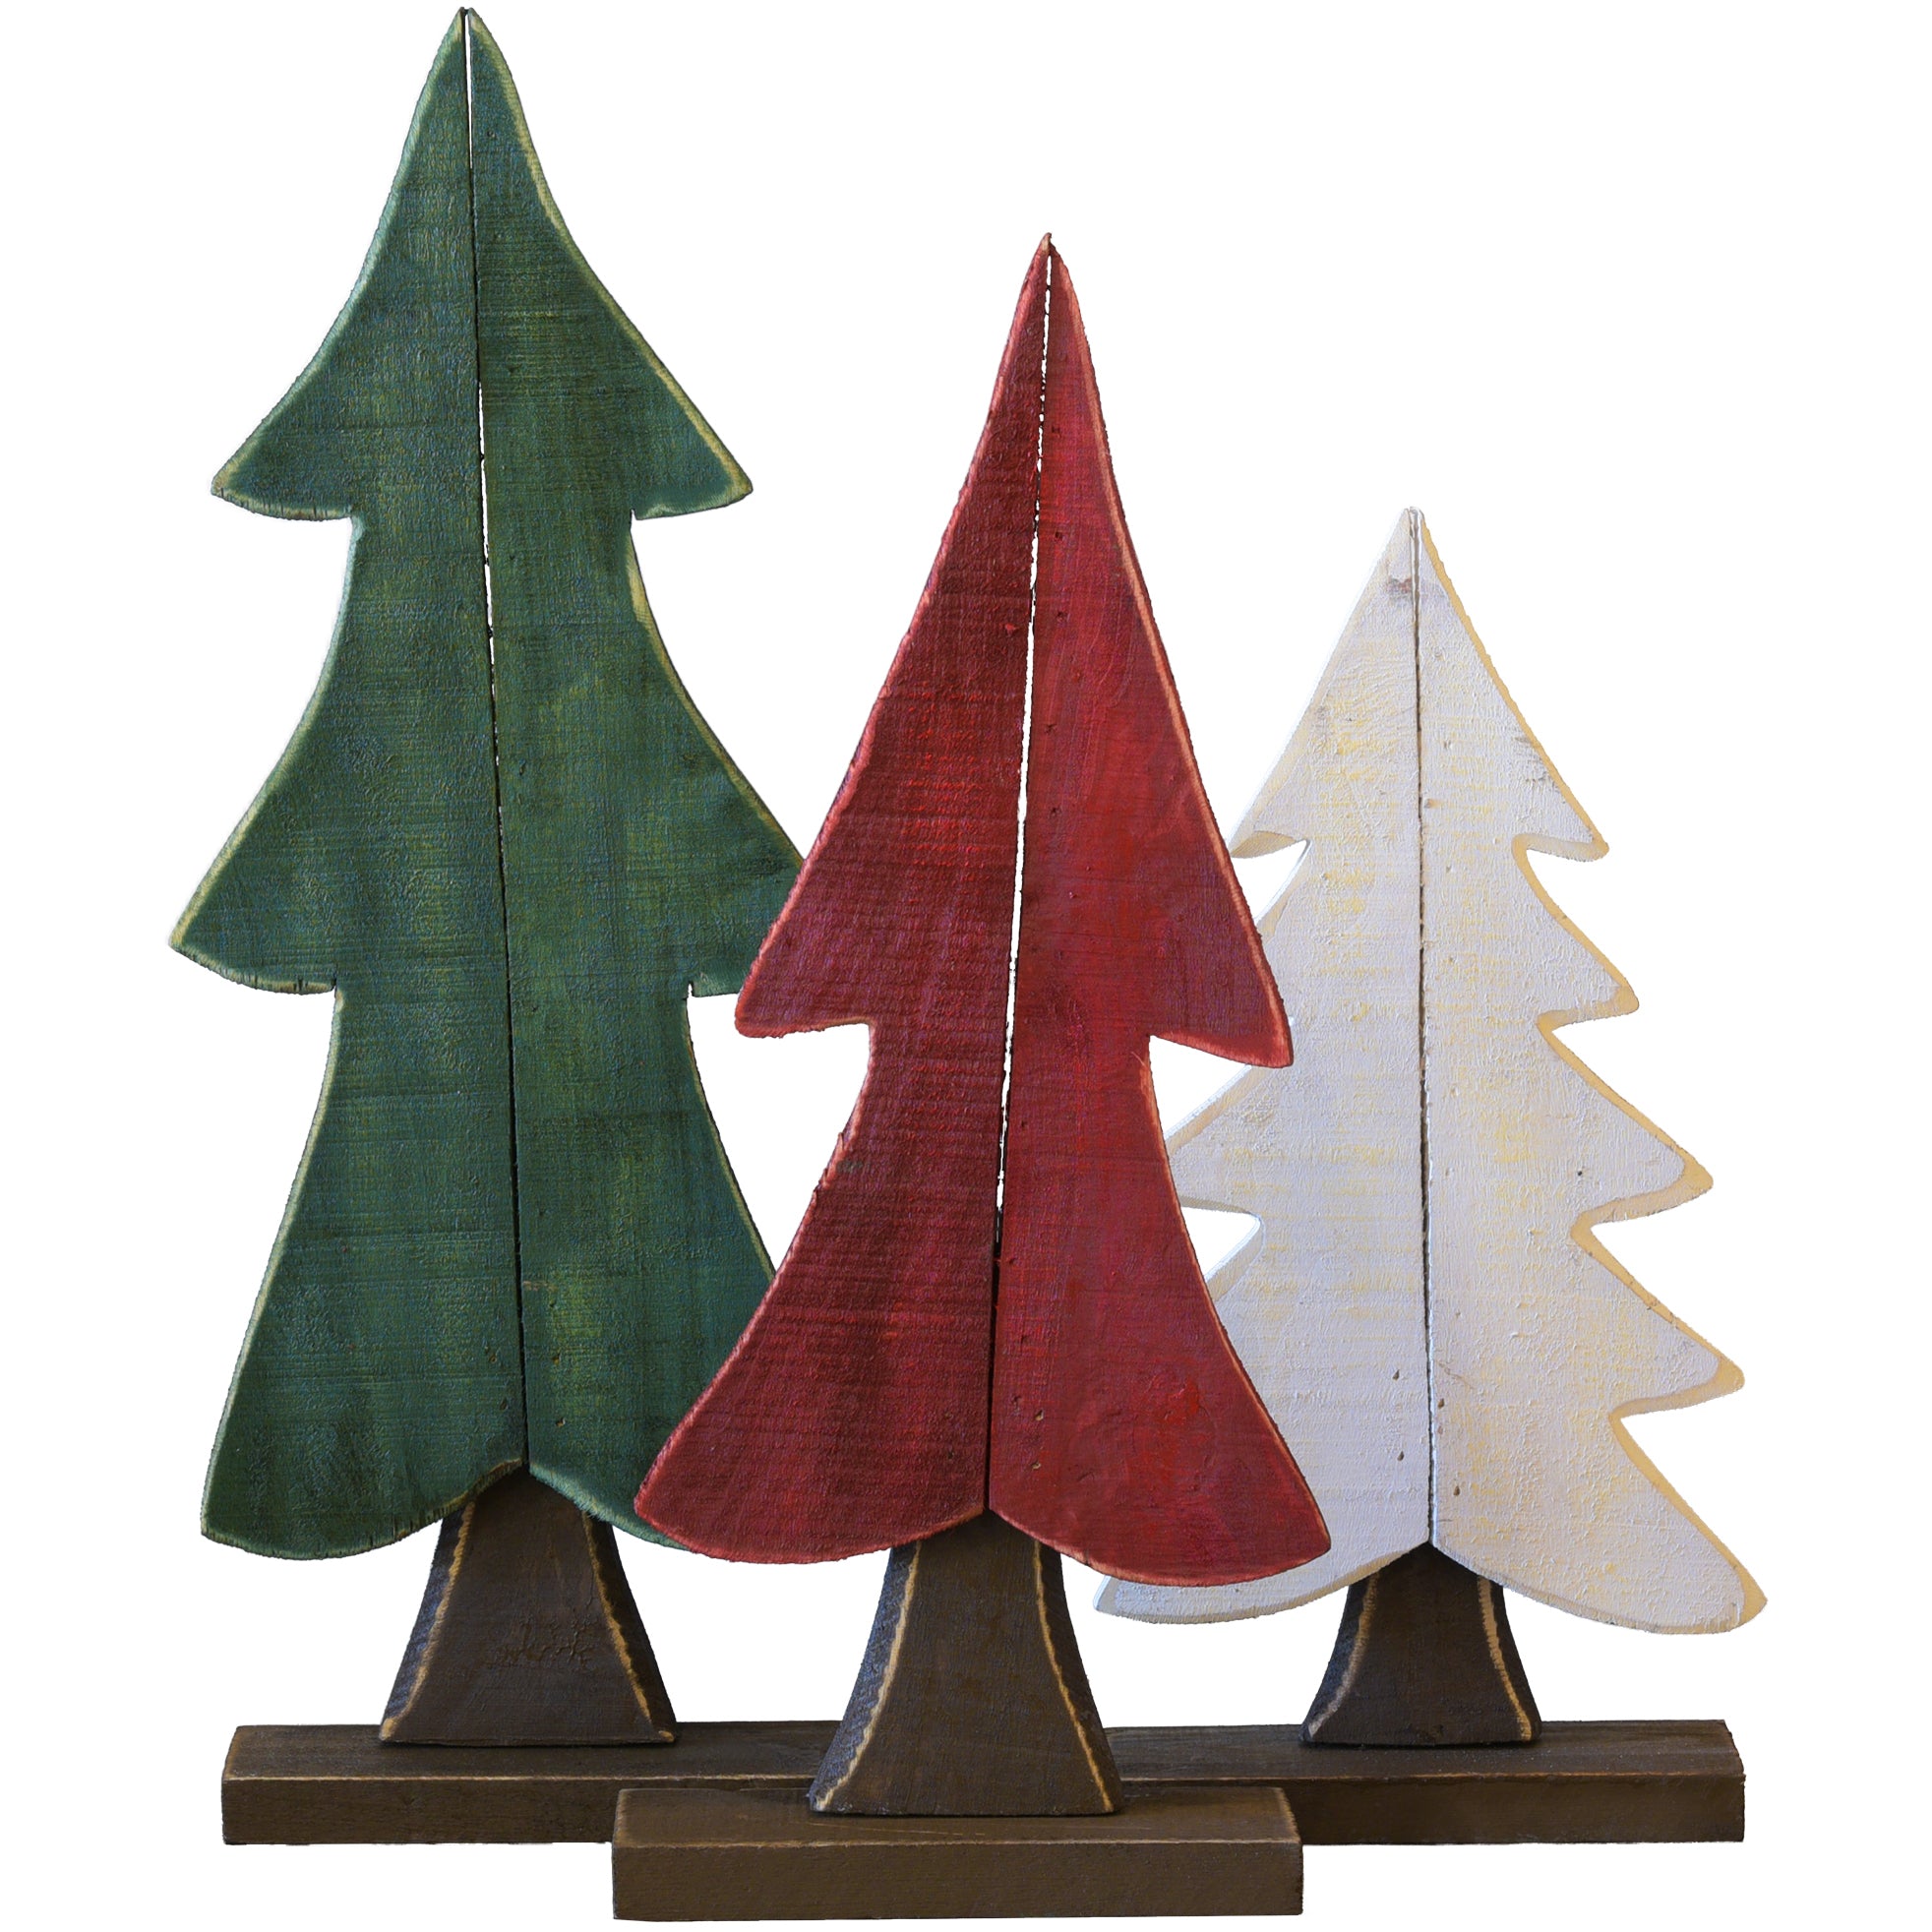 Rustic Wood Christmas Trees - Set of 3 - Woodwaves